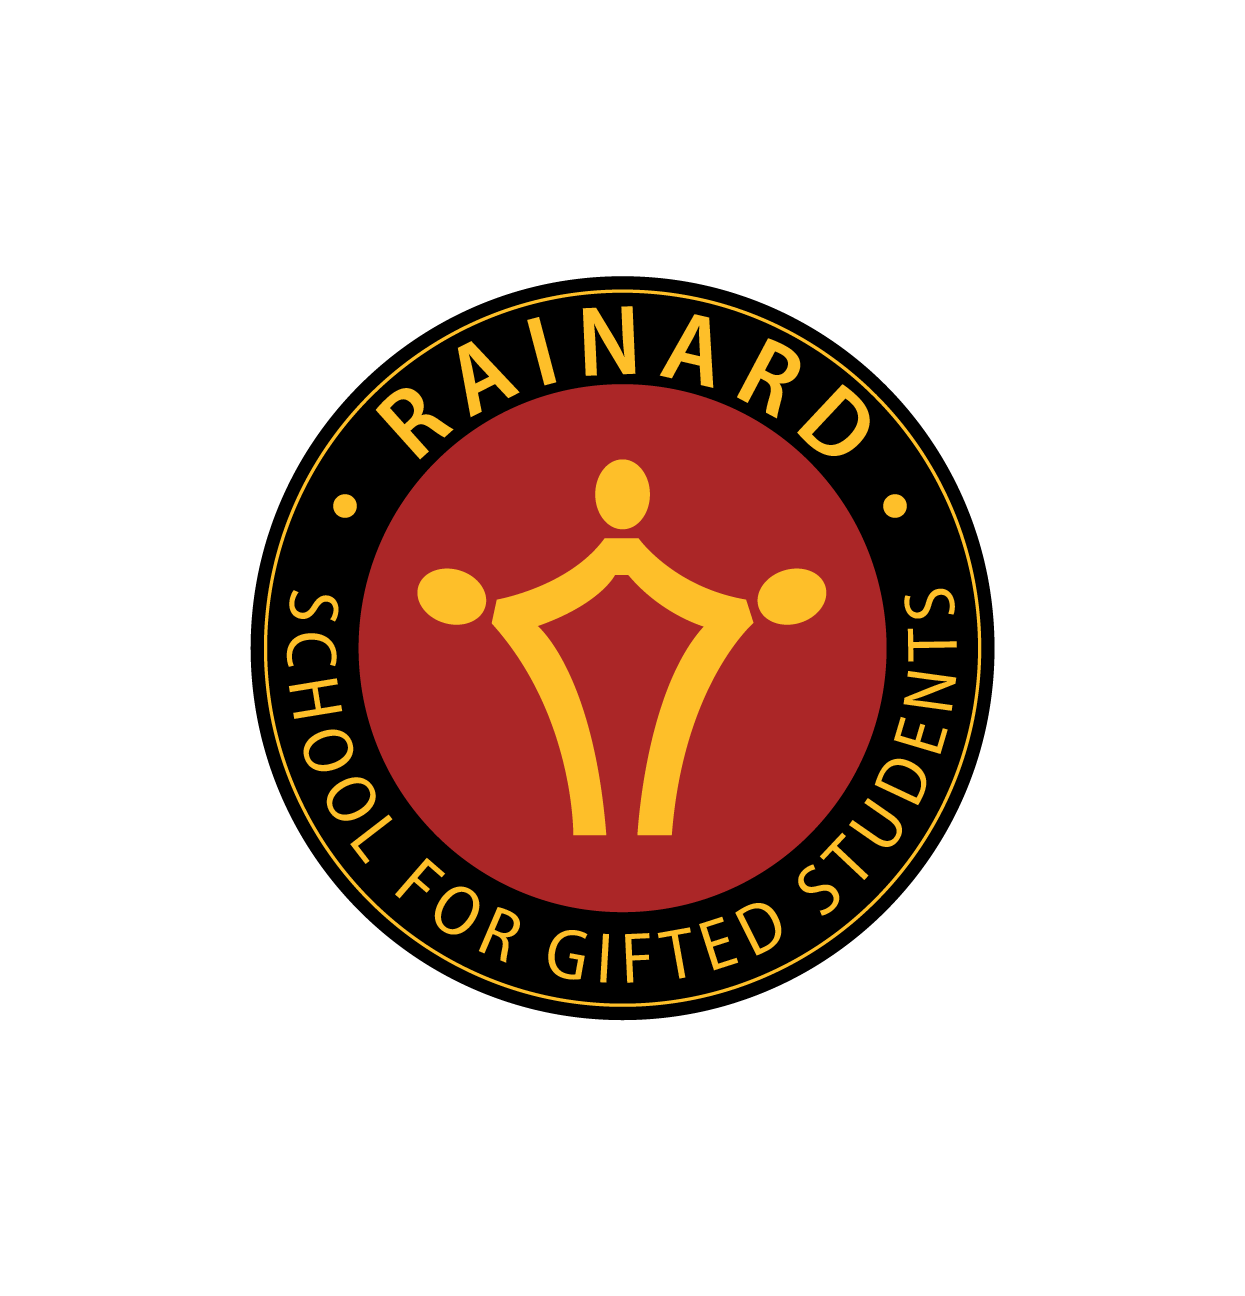 Rainard School for the GIfted logo